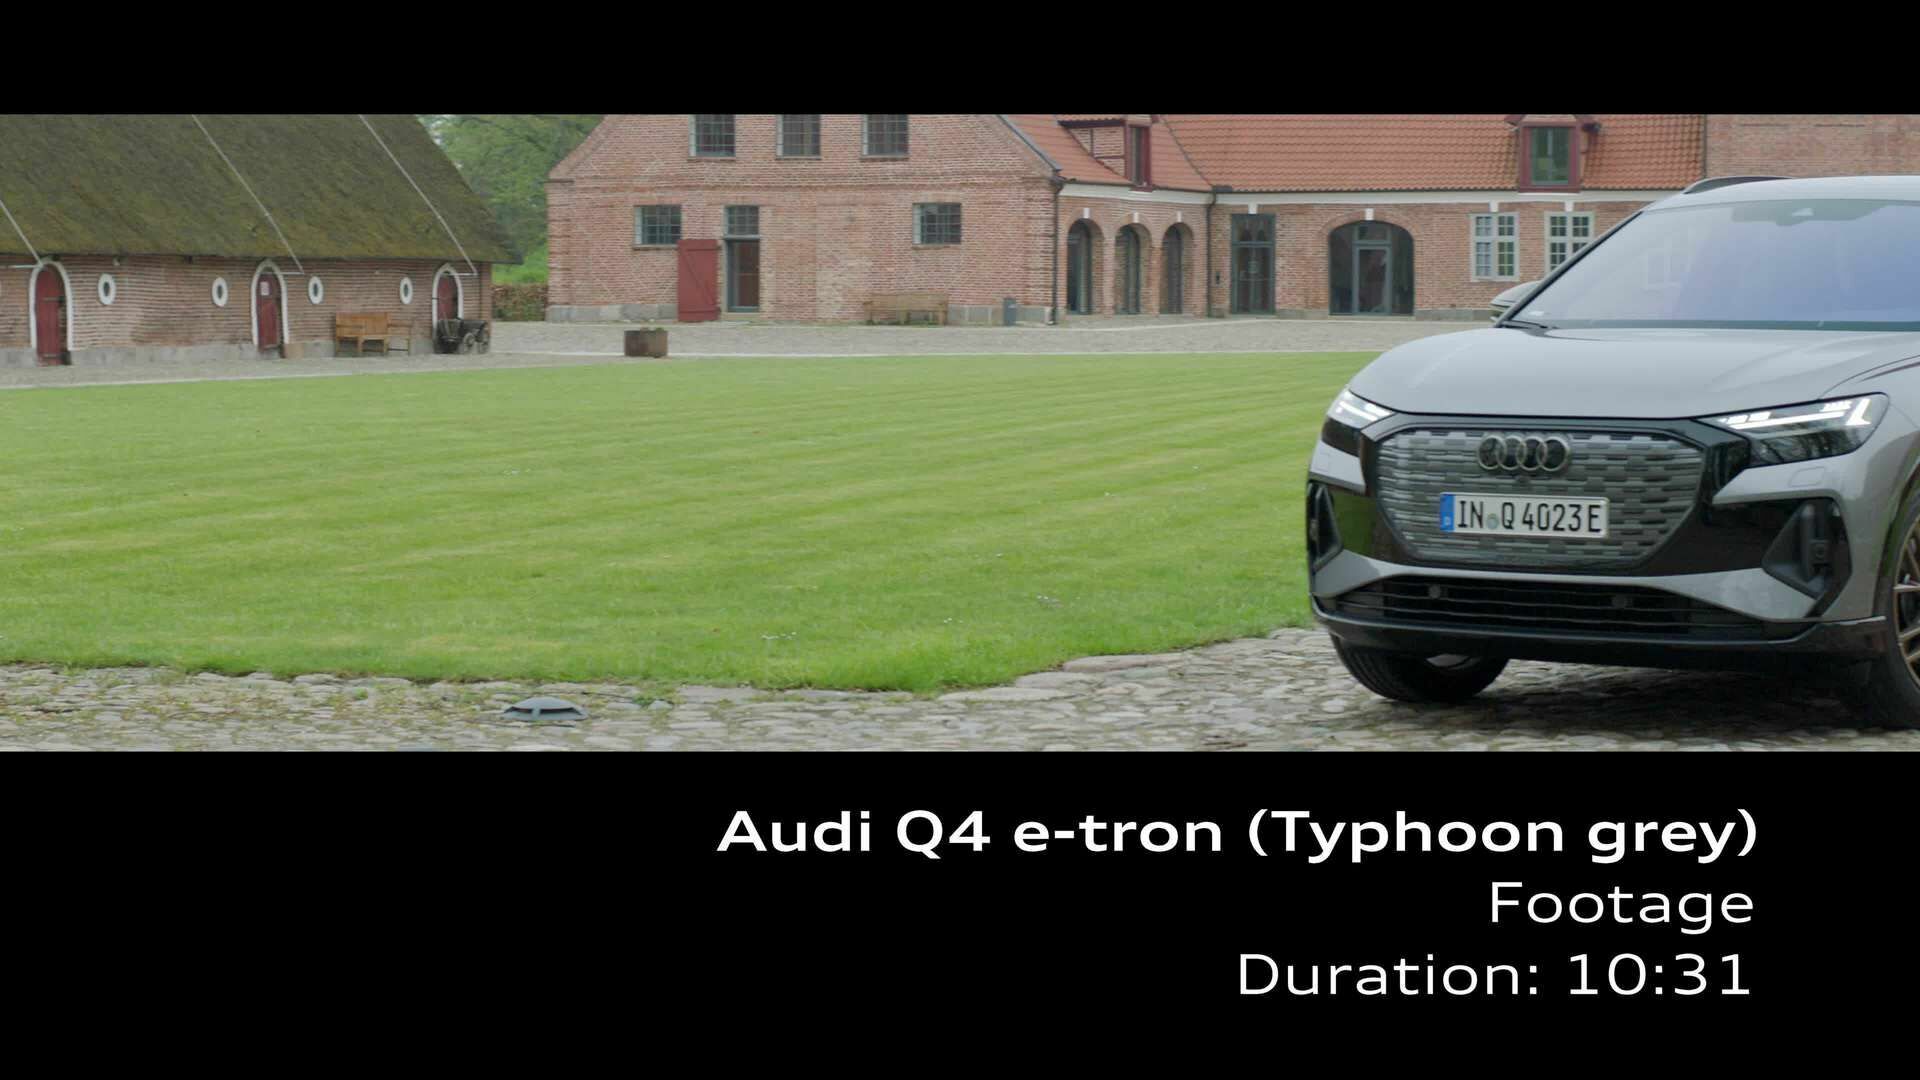 Footage: Audi Q4 e-tron – Typhoon grey